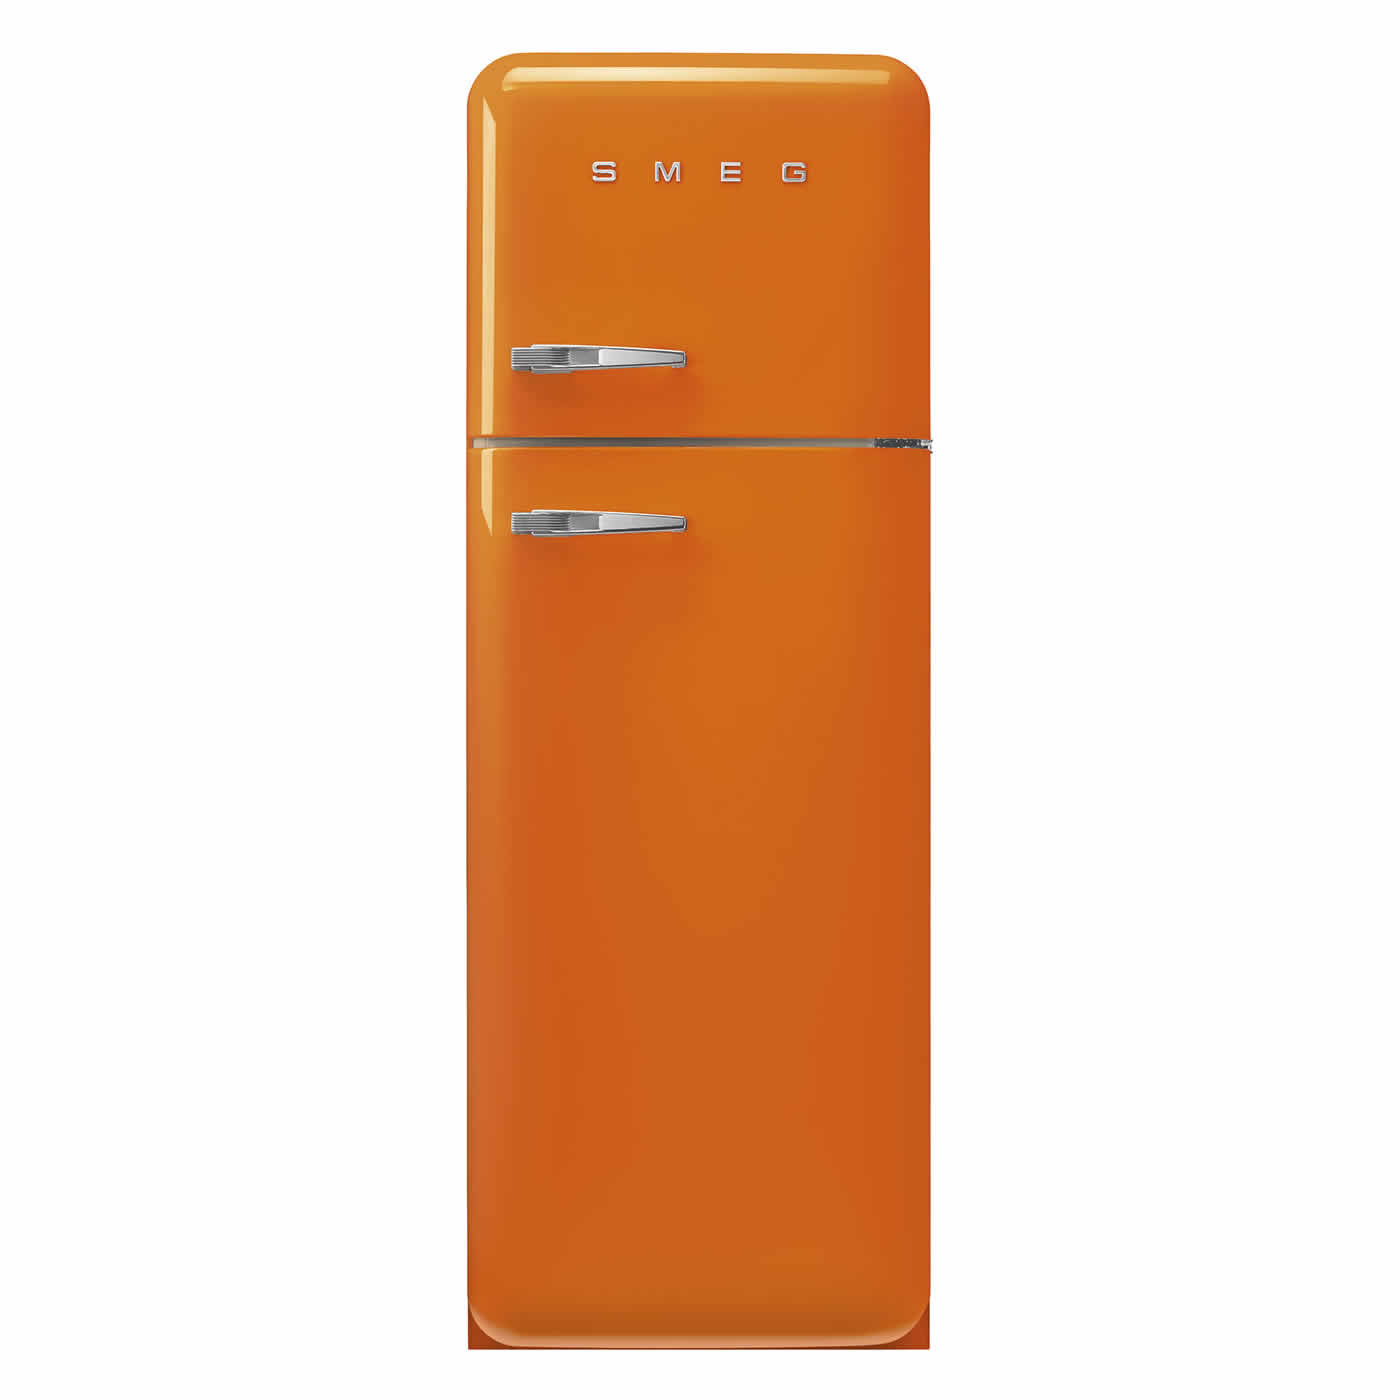 Smeg 294litre 1950s Retro Style Fridge Freezer Orange